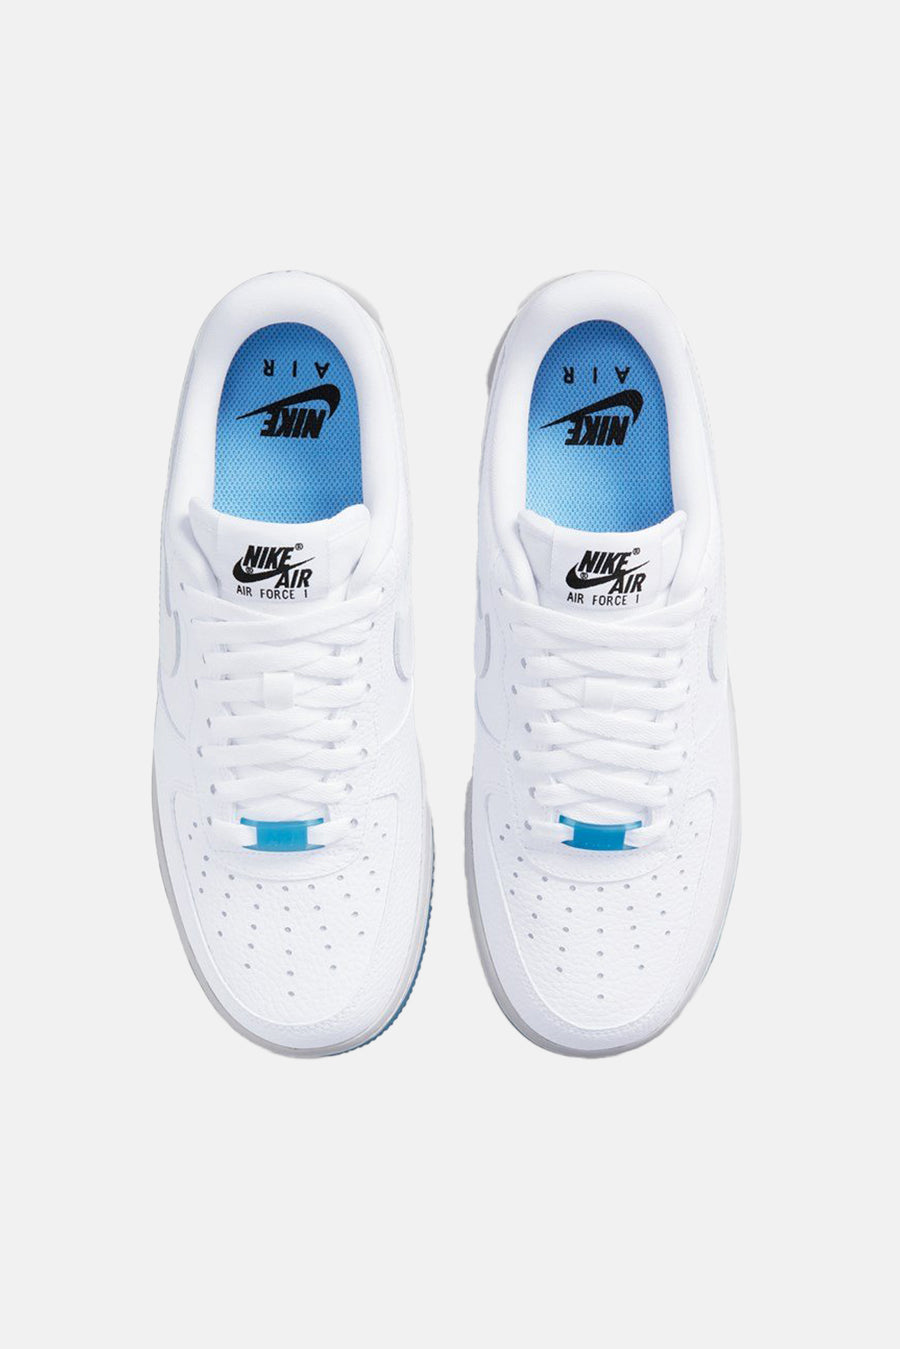 Nike Air Force 1 '07 (White/University Blue) 11.5